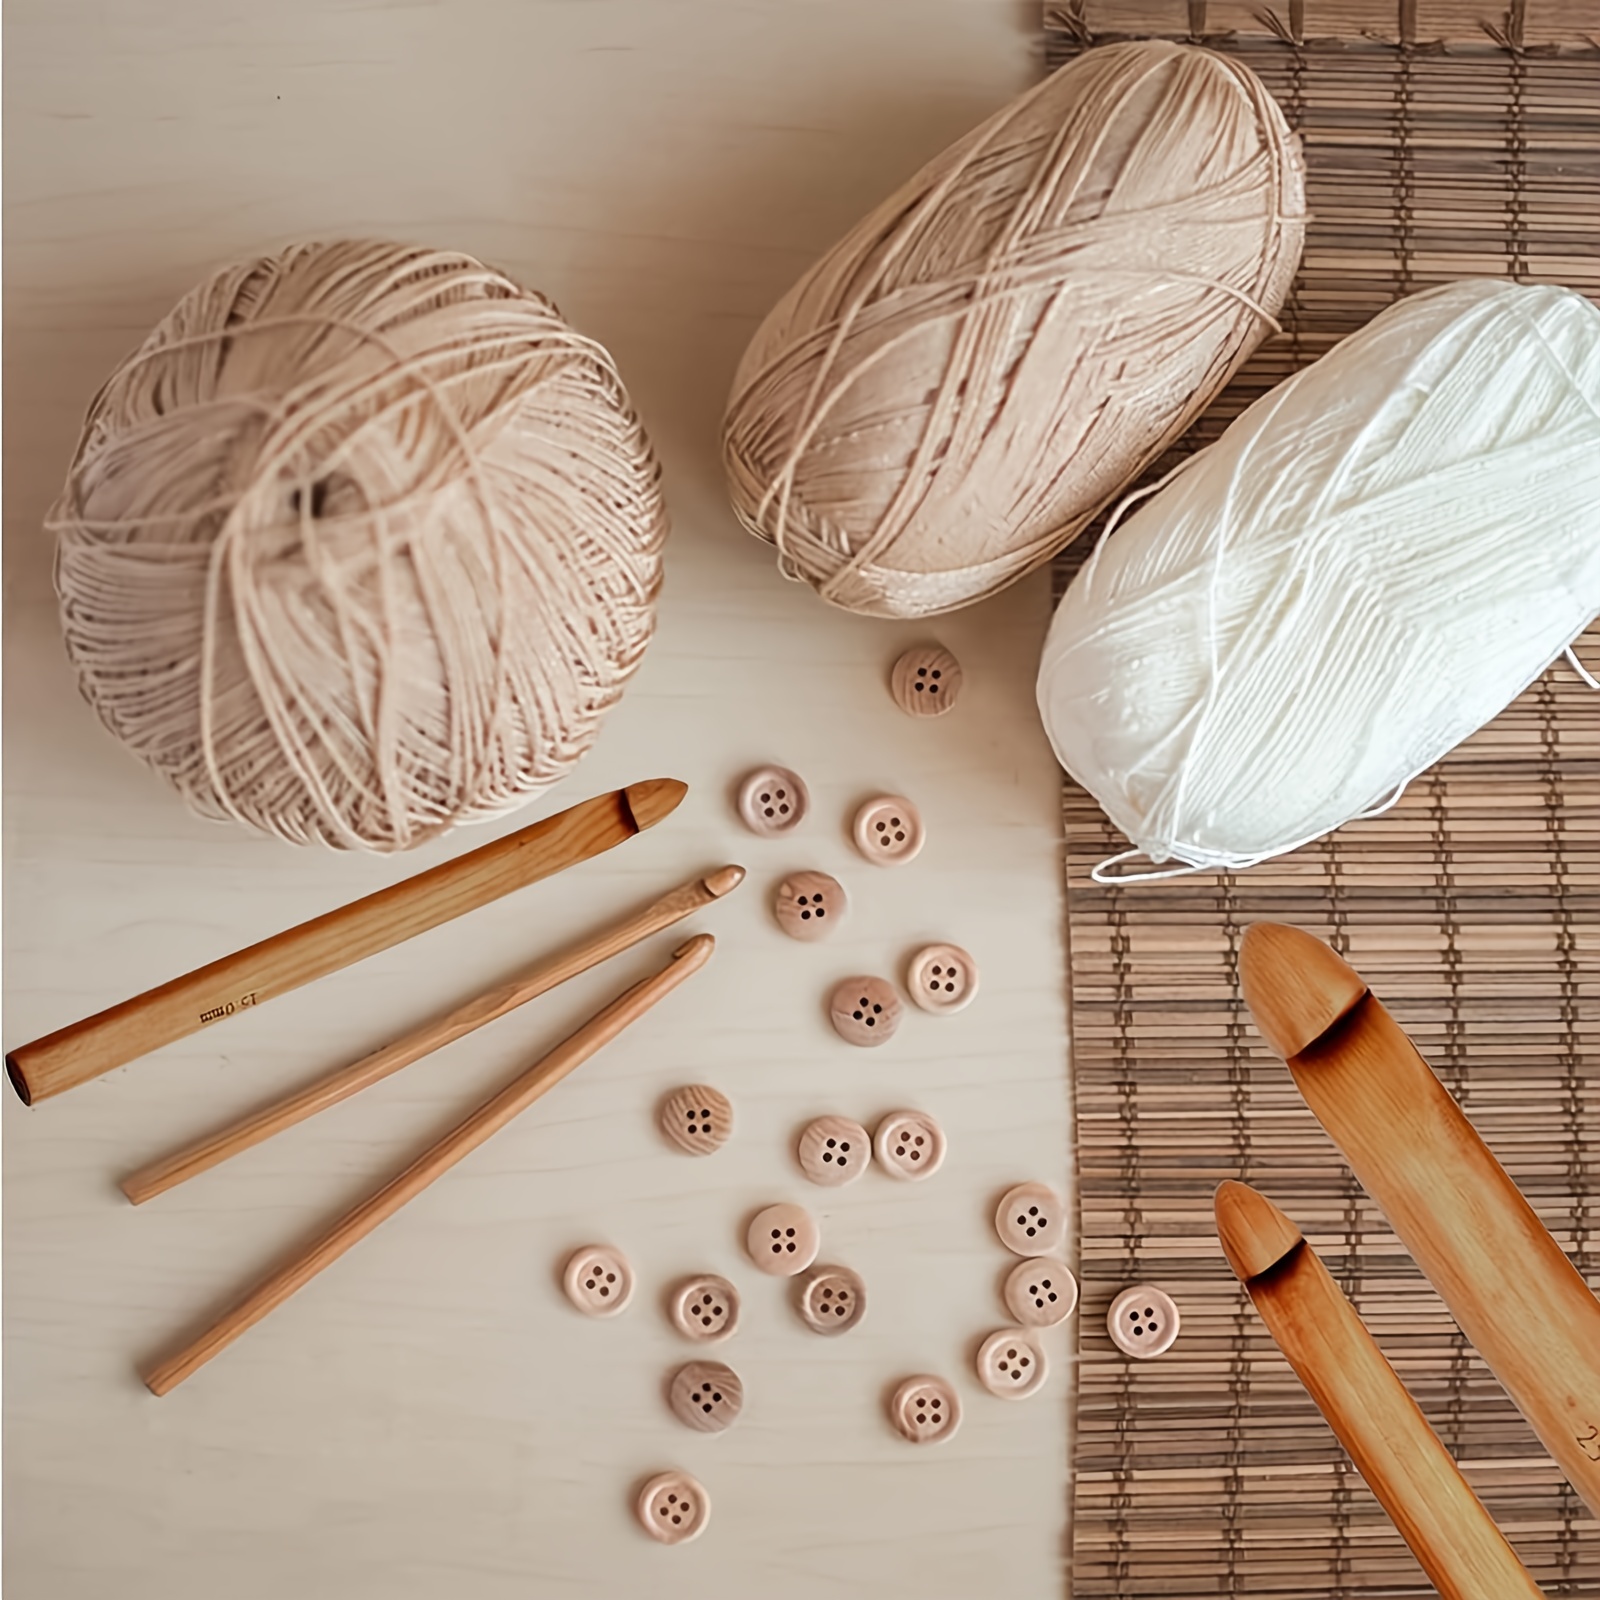  12 Pcs Wooden Crochet Hooks 3mm-10mm Smooth Eye Blunt Bamboo  Knitting Needles Set Weaving Craft Tool by SamGreatWorld